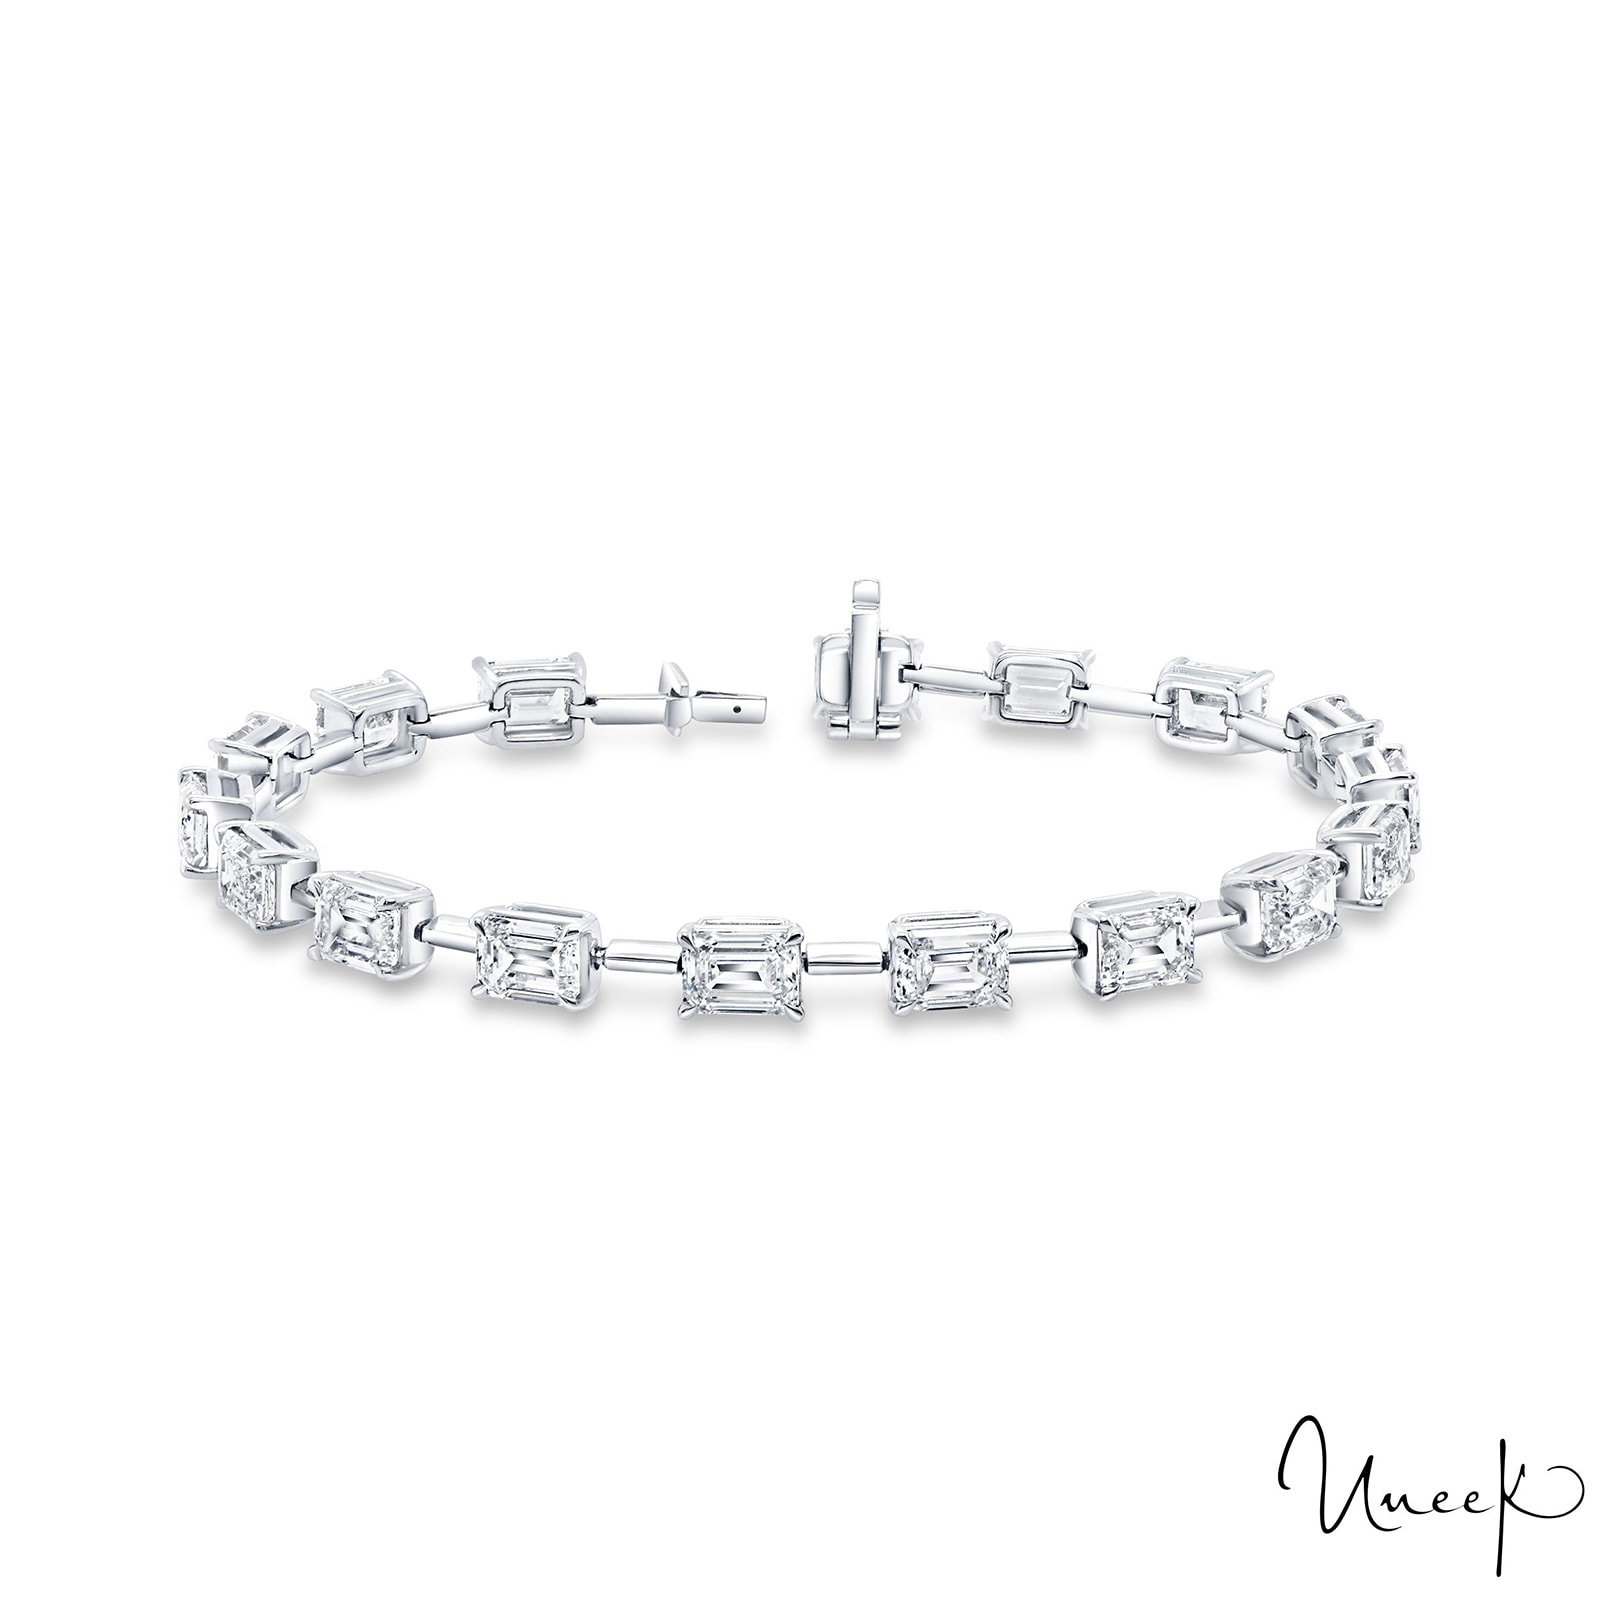 Ionela iionela1  Fotografii şi clipuri video Instagram  Diamond jewelry  designs Bangle bracelets with charms Diamond necklace designs